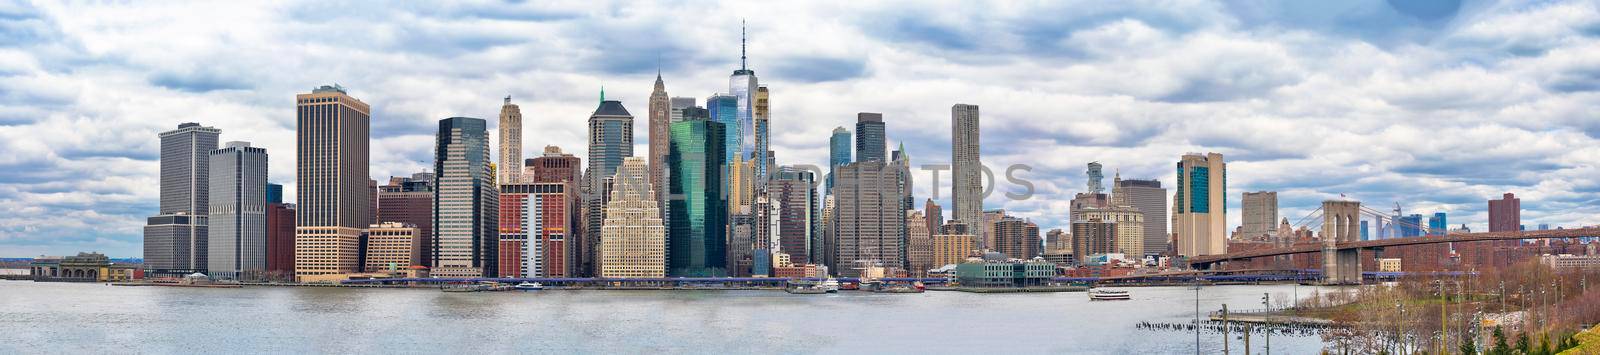 New York City downtown skyline panoramic view, United States of America